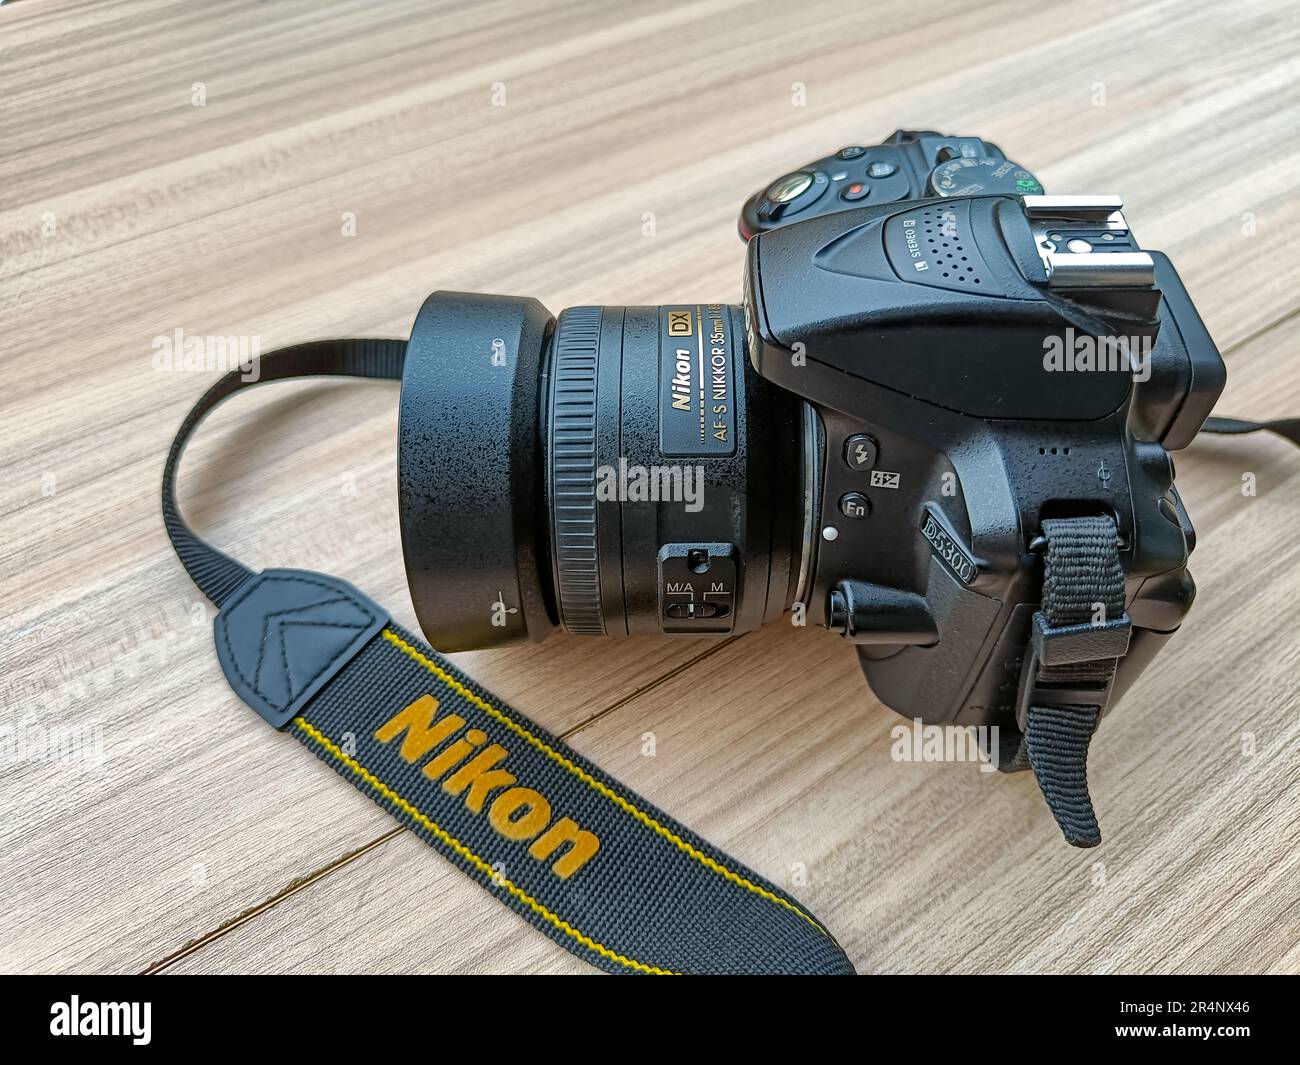 D5300 fotografías e imágenes de alta resolución - Alamy